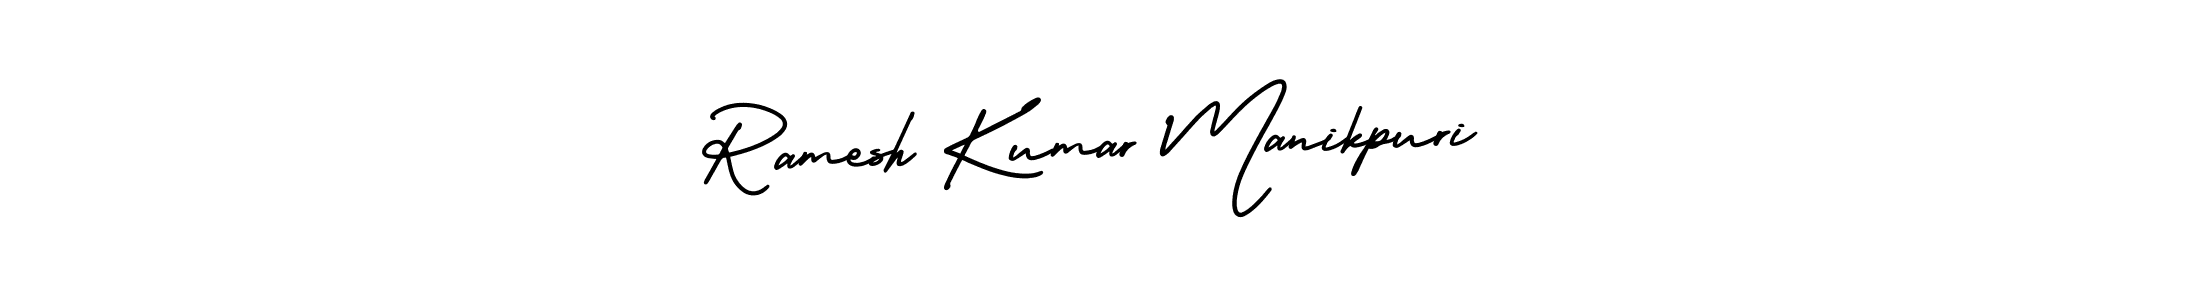 Best and Professional Signature Style for Ramesh Kumar Manikpuri. AmerikaSignatureDemo-Regular Best Signature Style Collection. Ramesh Kumar Manikpuri signature style 3 images and pictures png